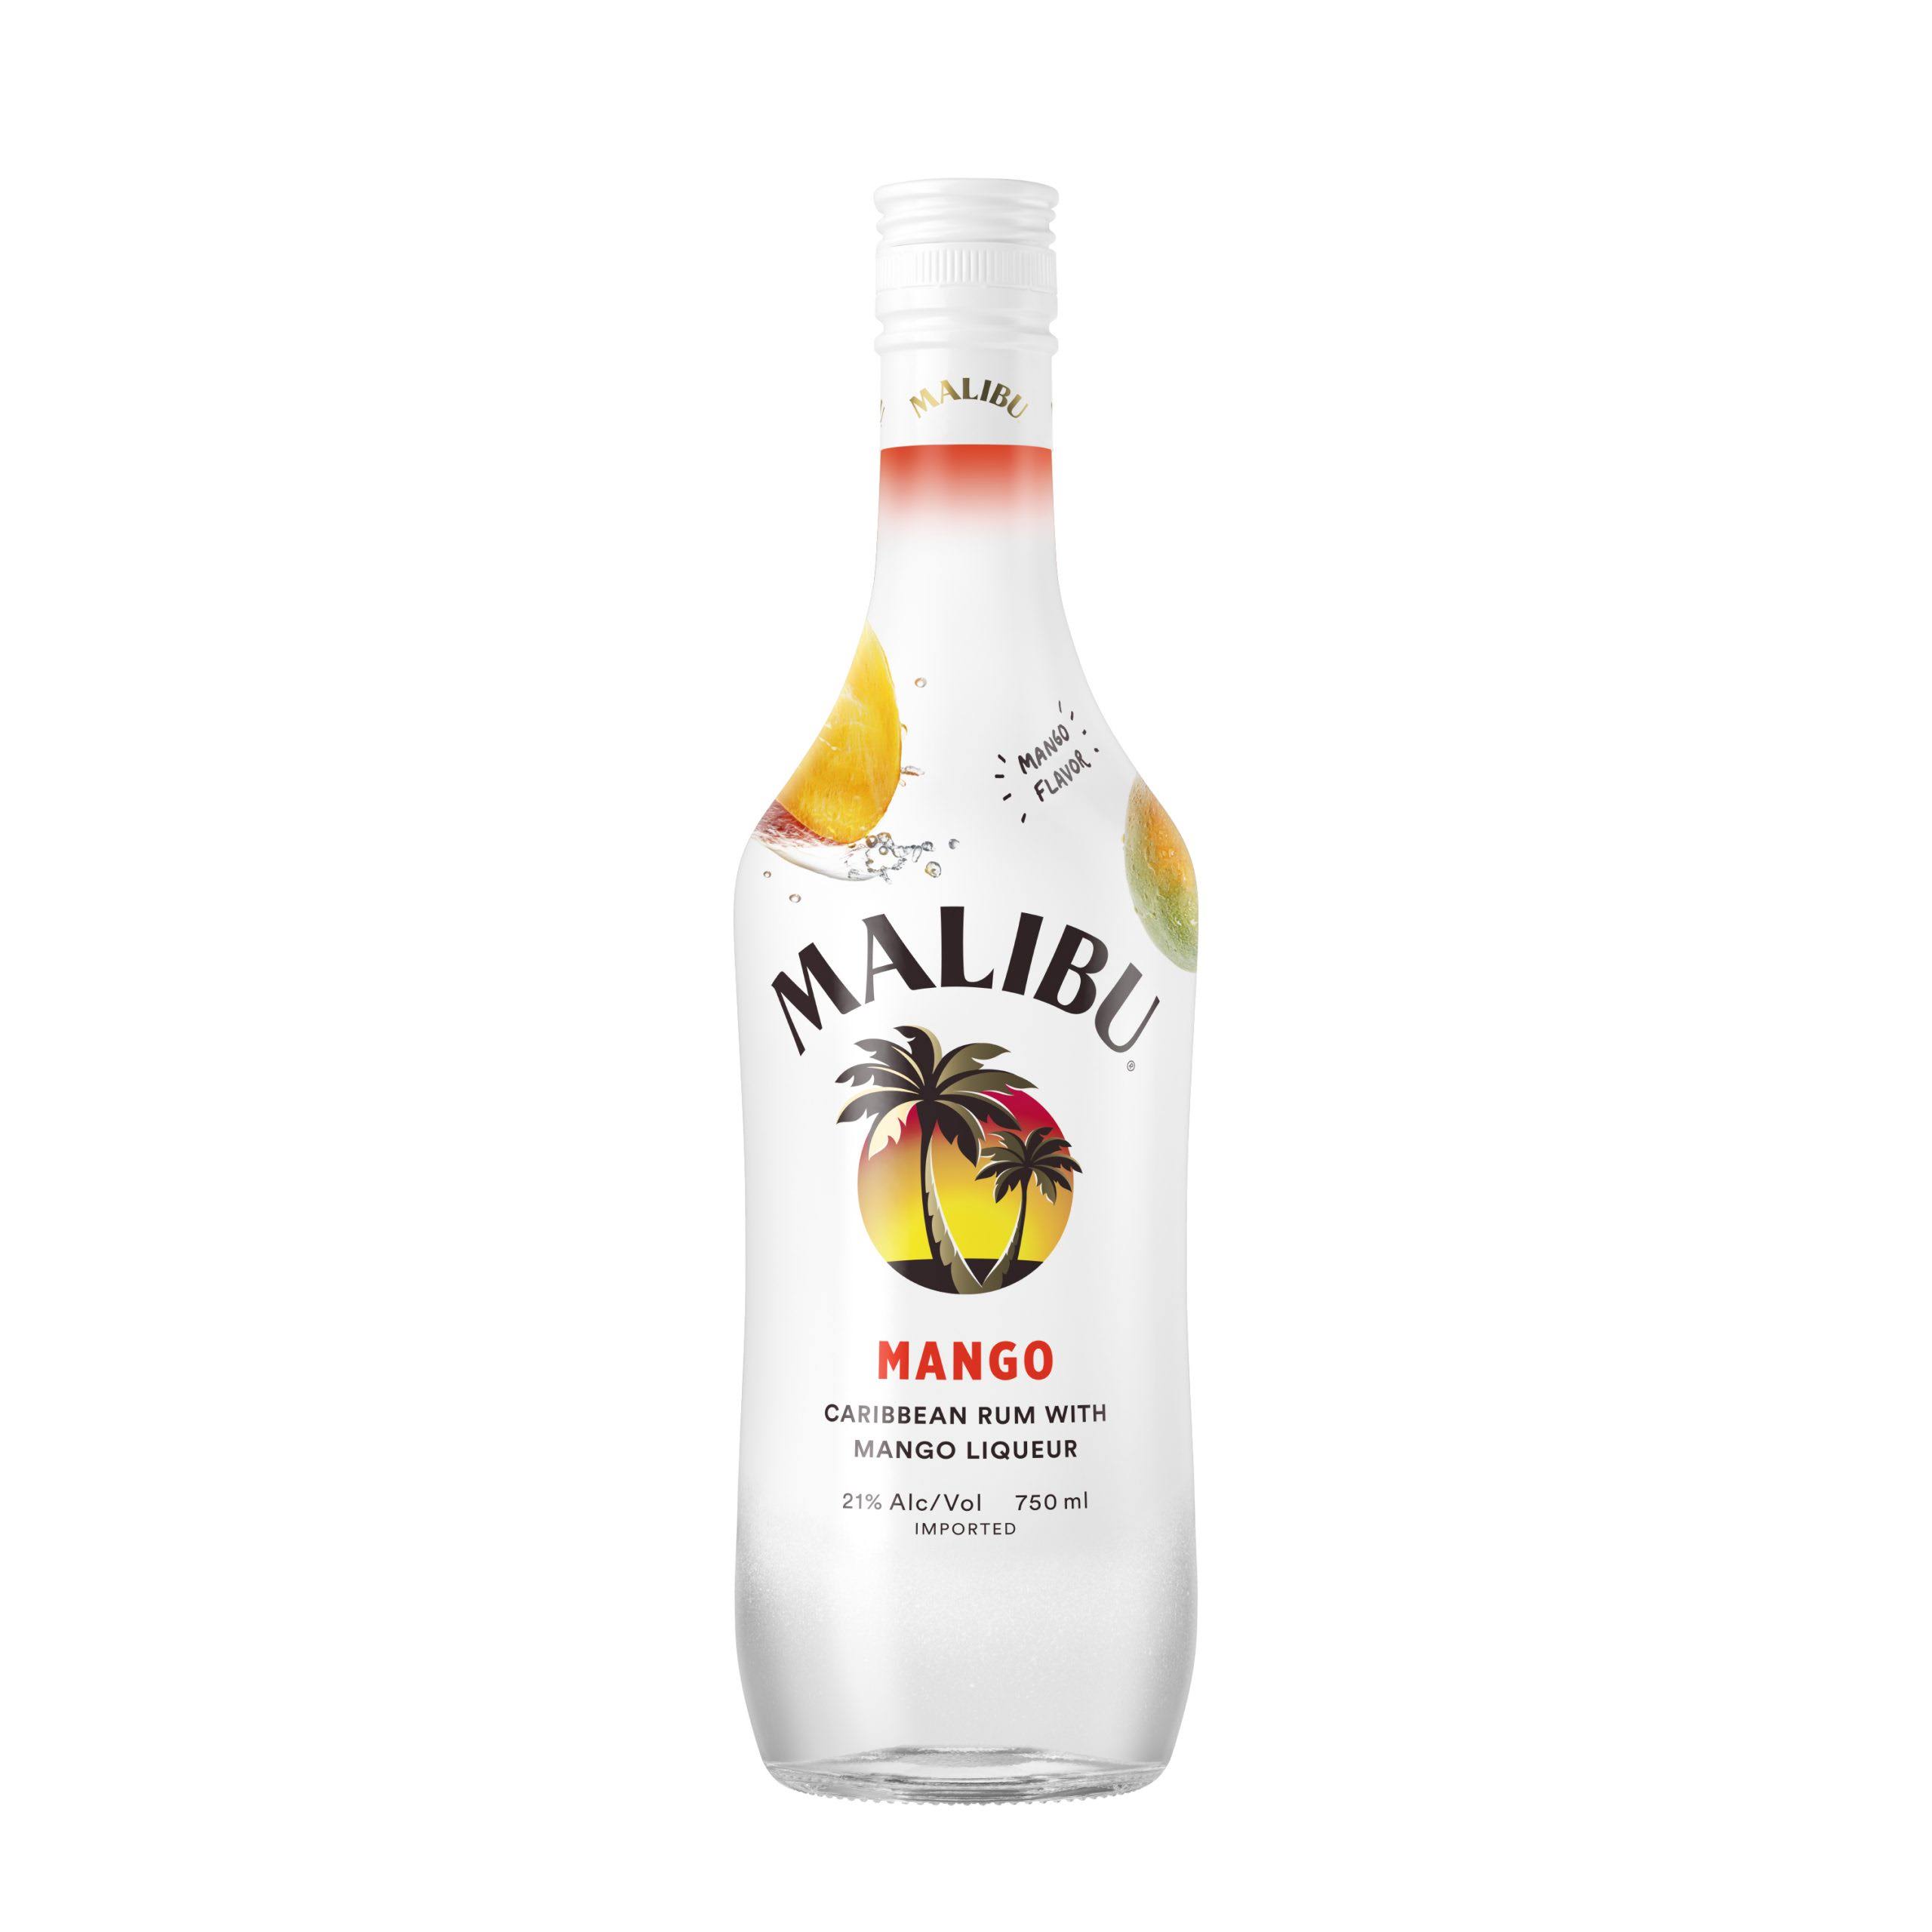 Malibu Caribbean Rum - Mango